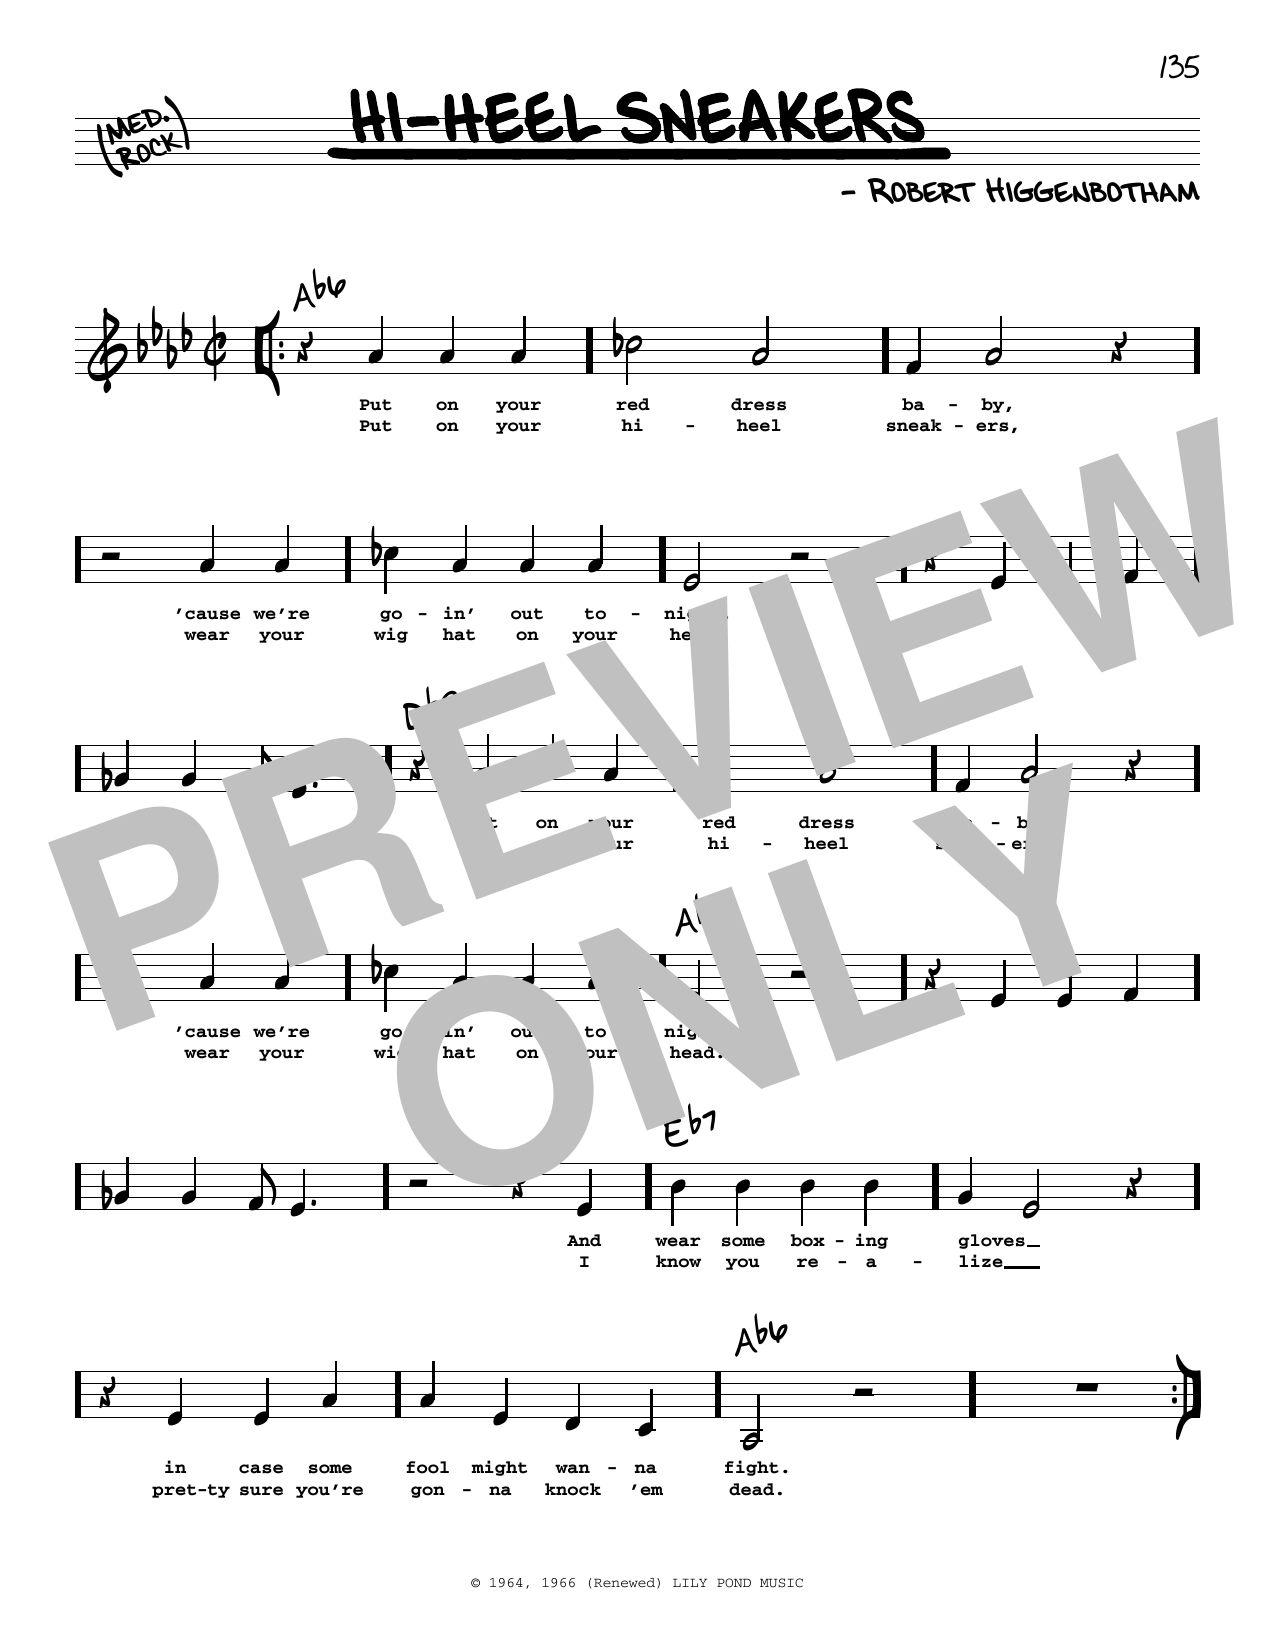 Stevie Wonder Hi-Heel Sneakers (Low Voice) sheet music notes printable PDF score